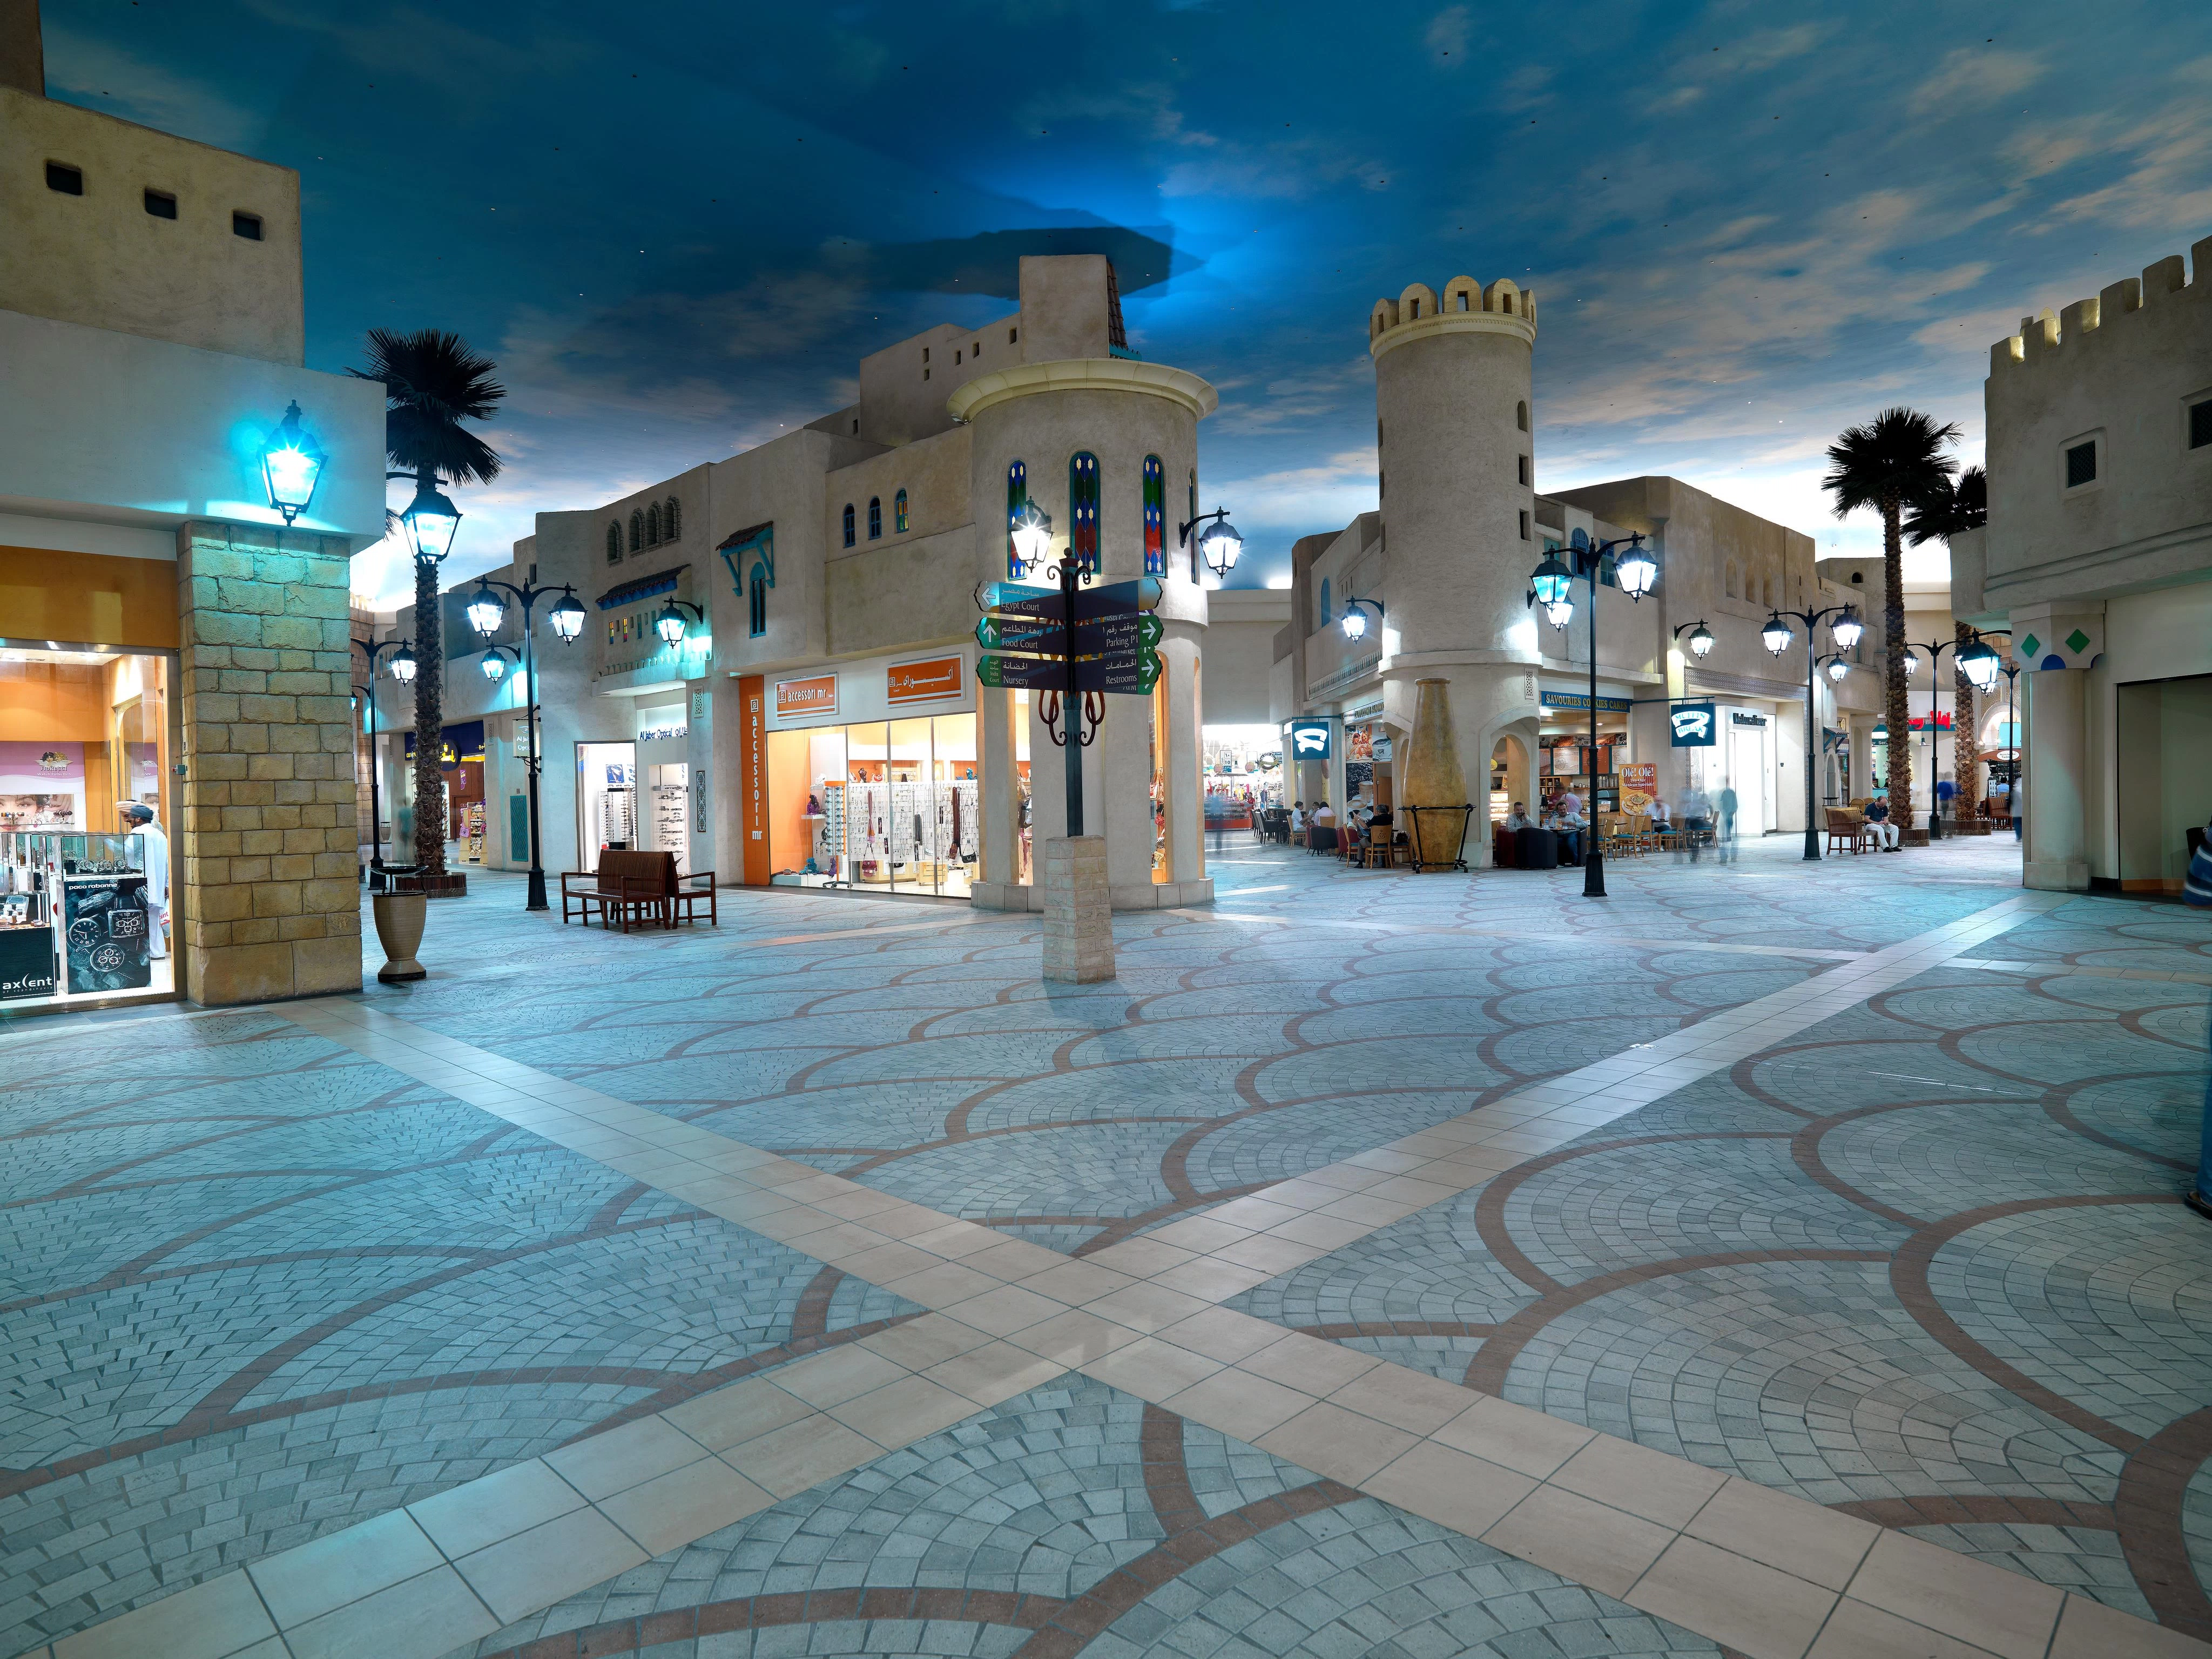 AtlasConcorde IBN Battuta Mall UAE 003